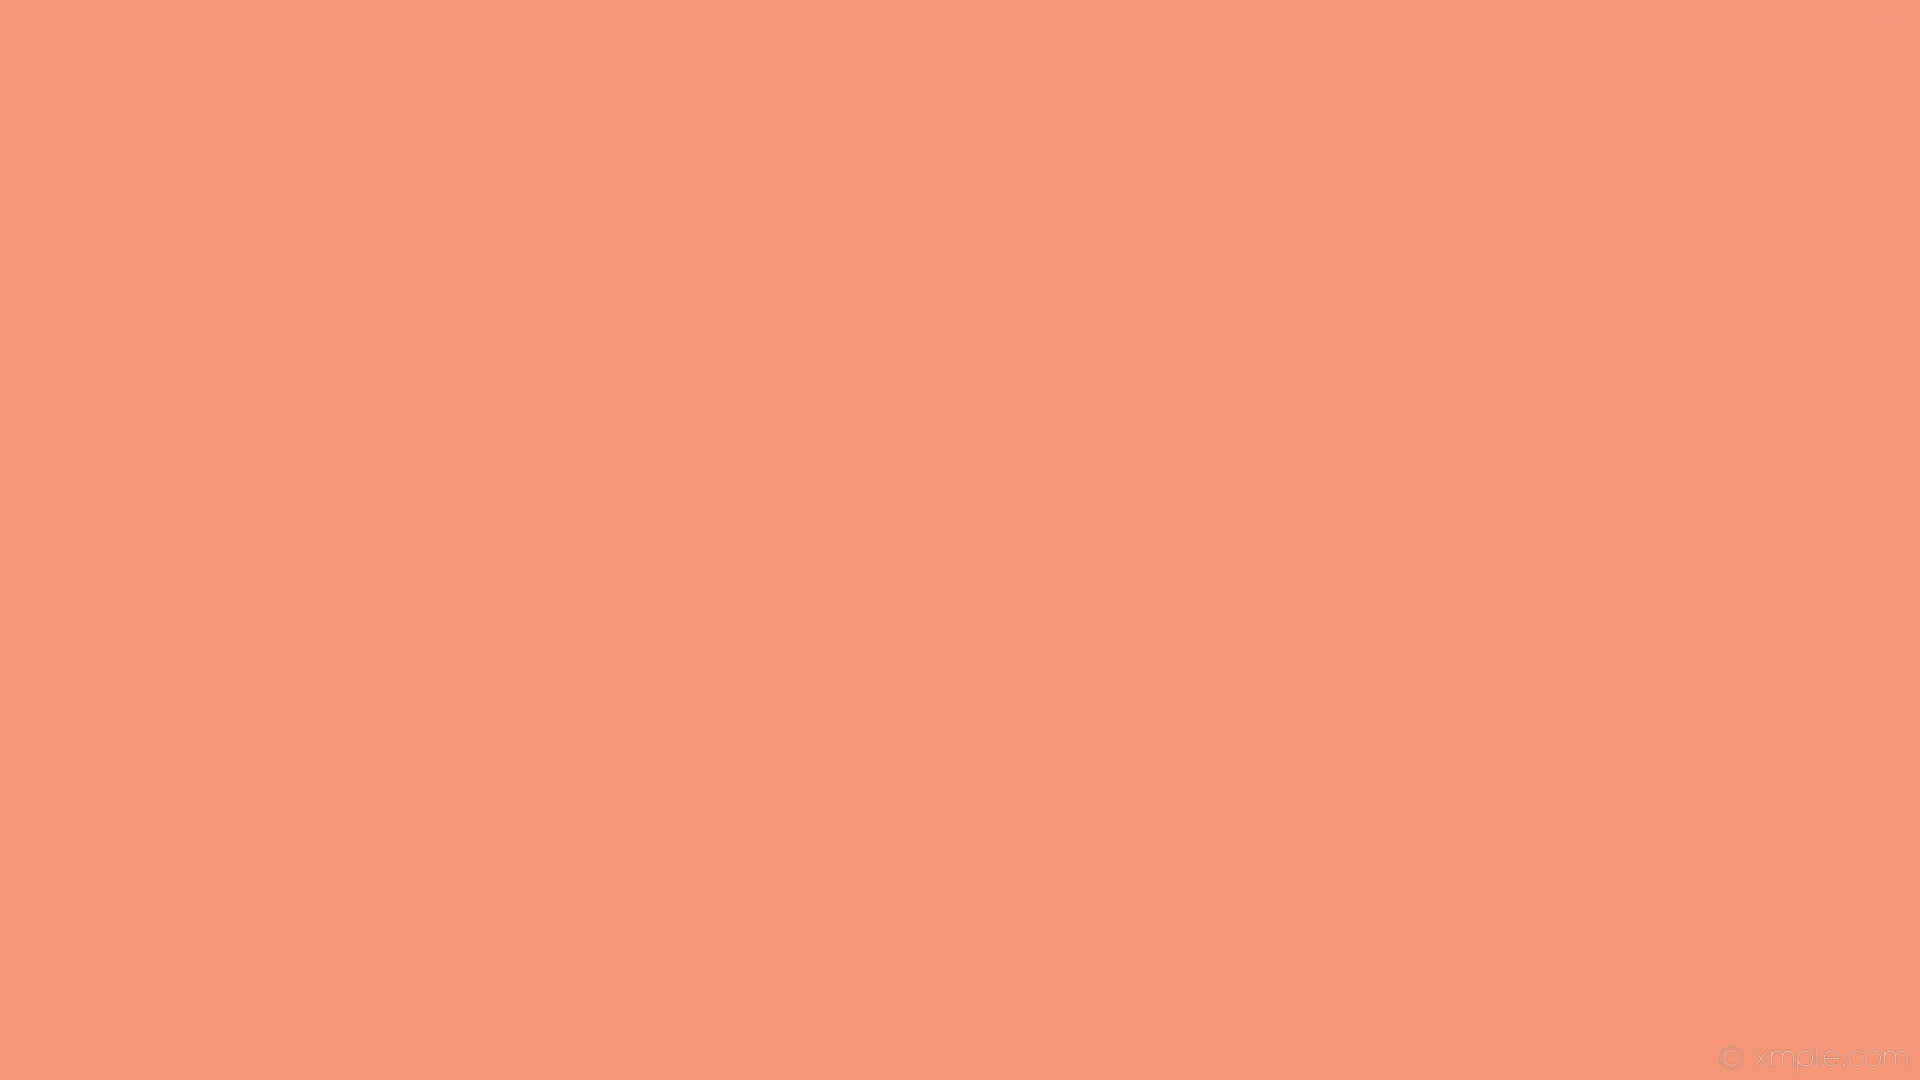 Premium Photo  Orange simple plain background texture  smooth light  gardient blur wallpaper